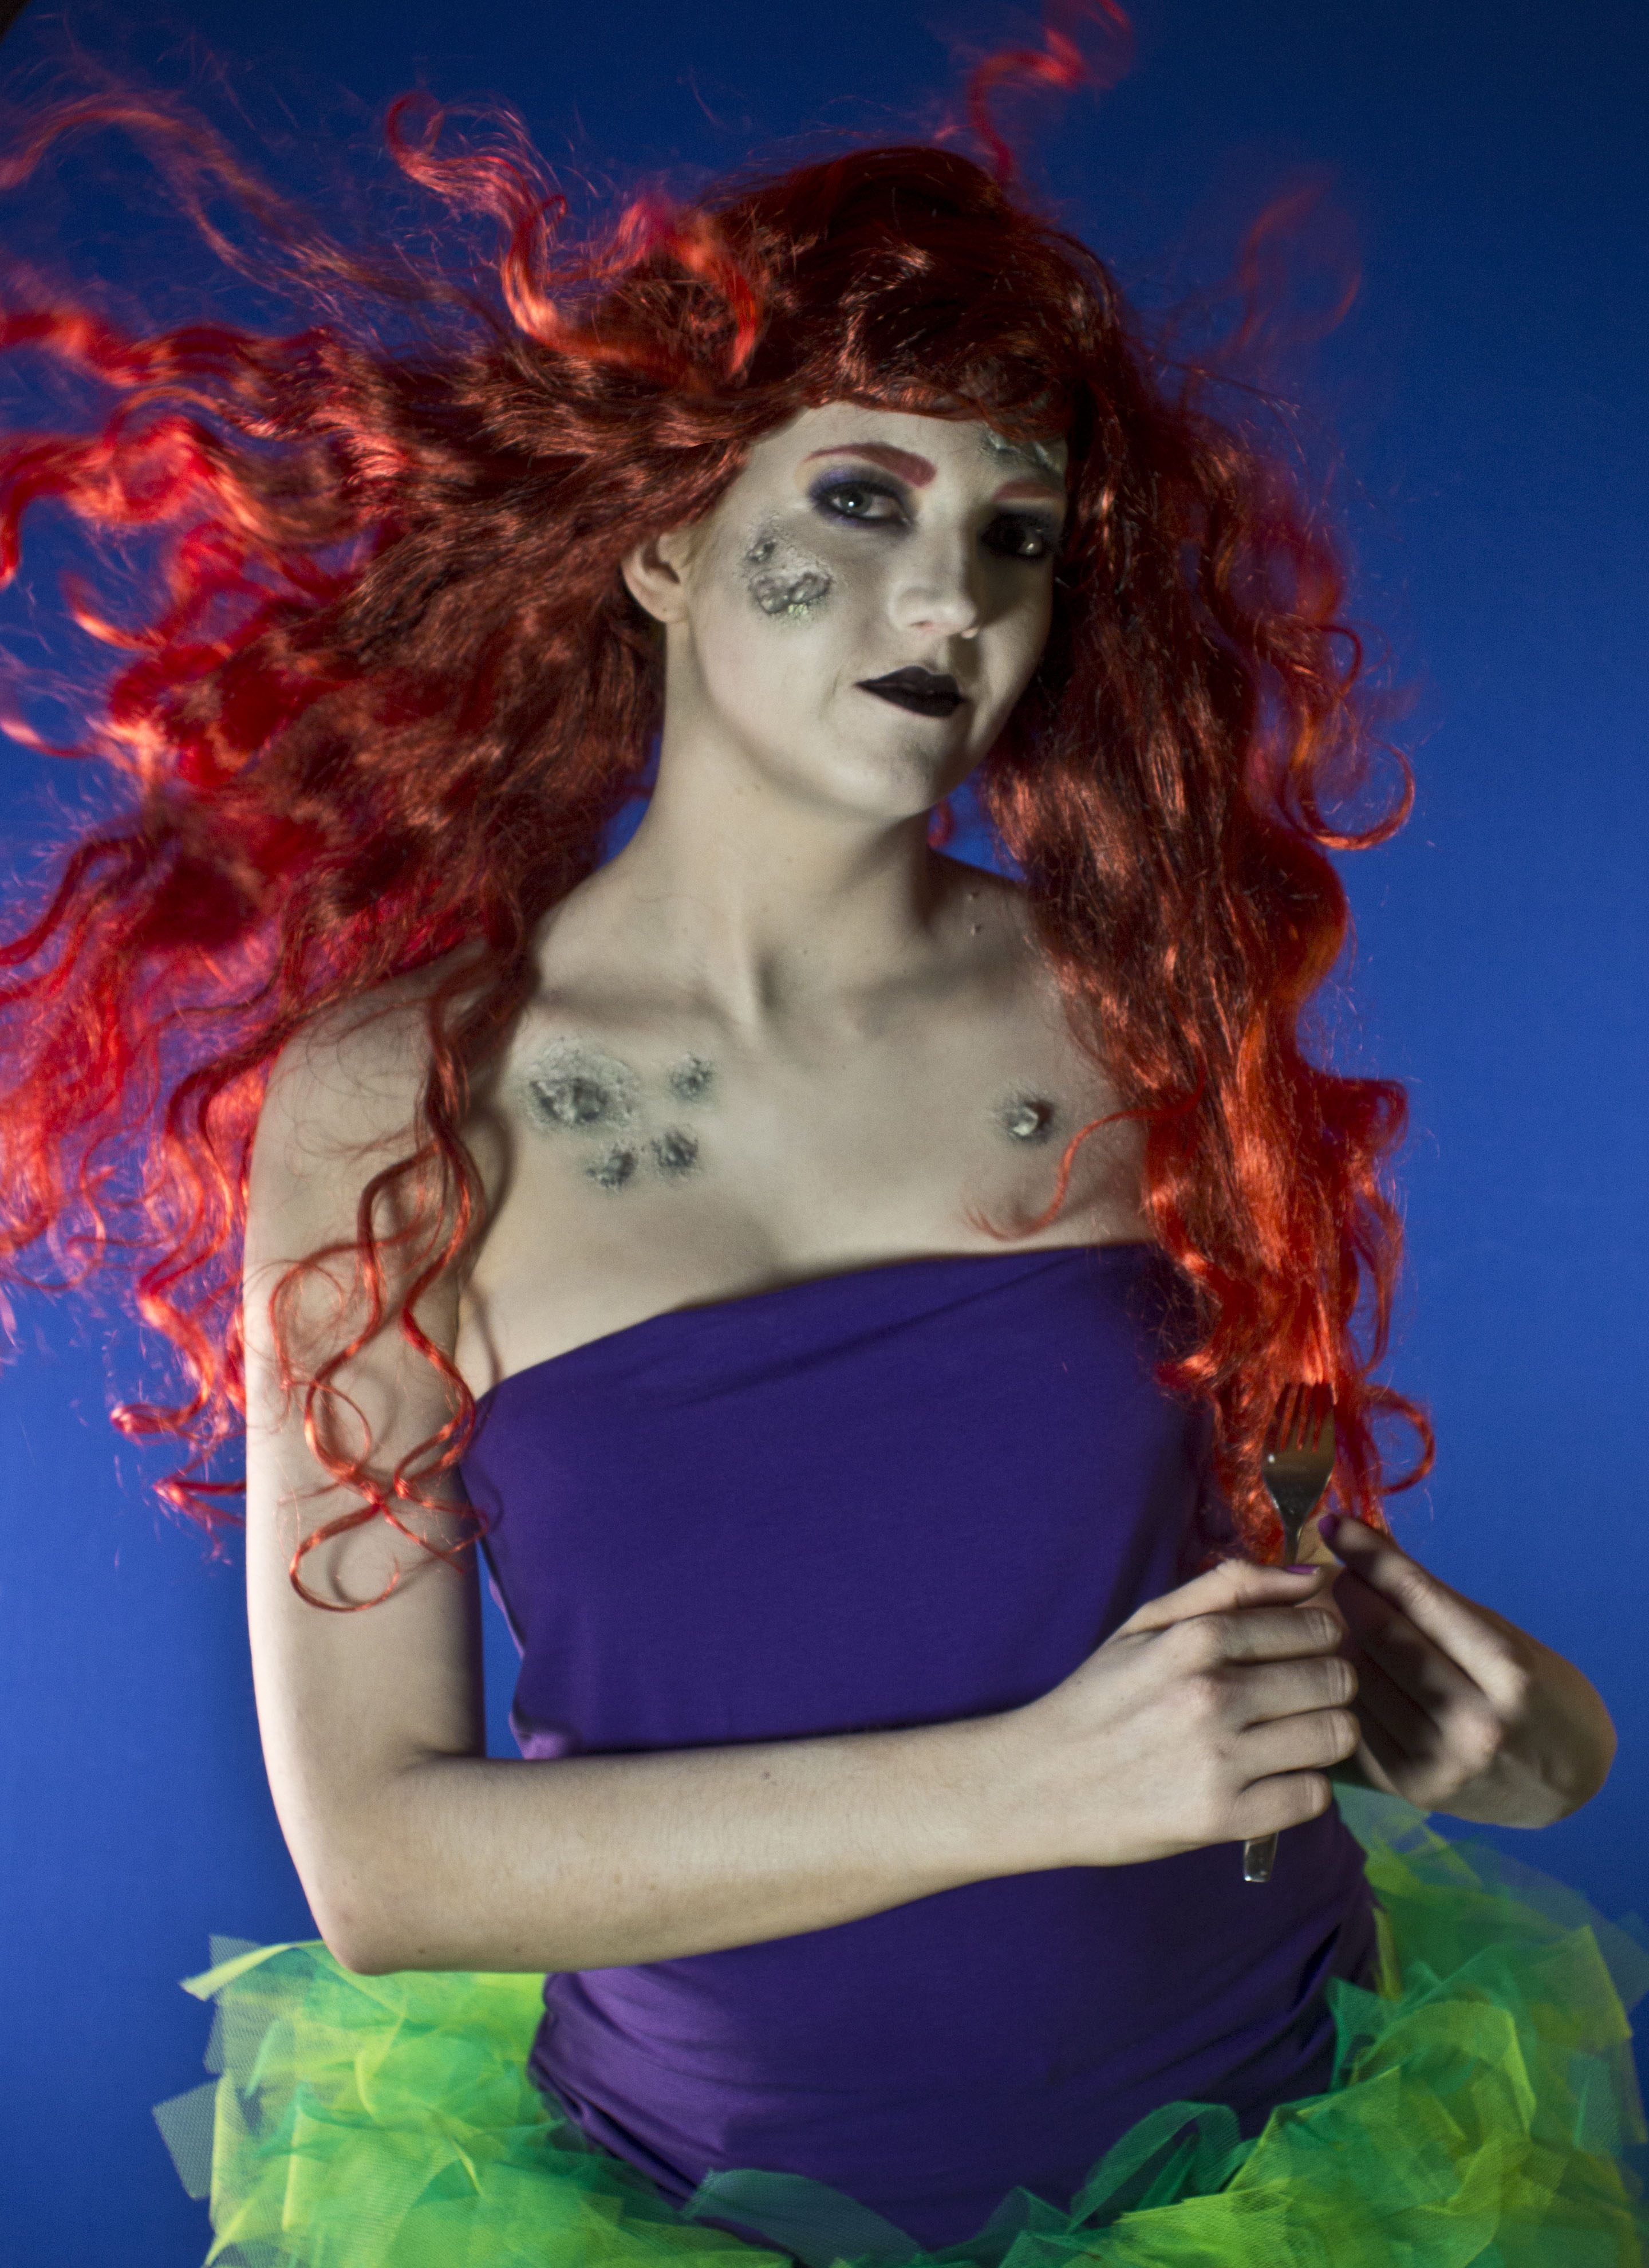 The Little Mermaid, Ariel, Inspired Makeup